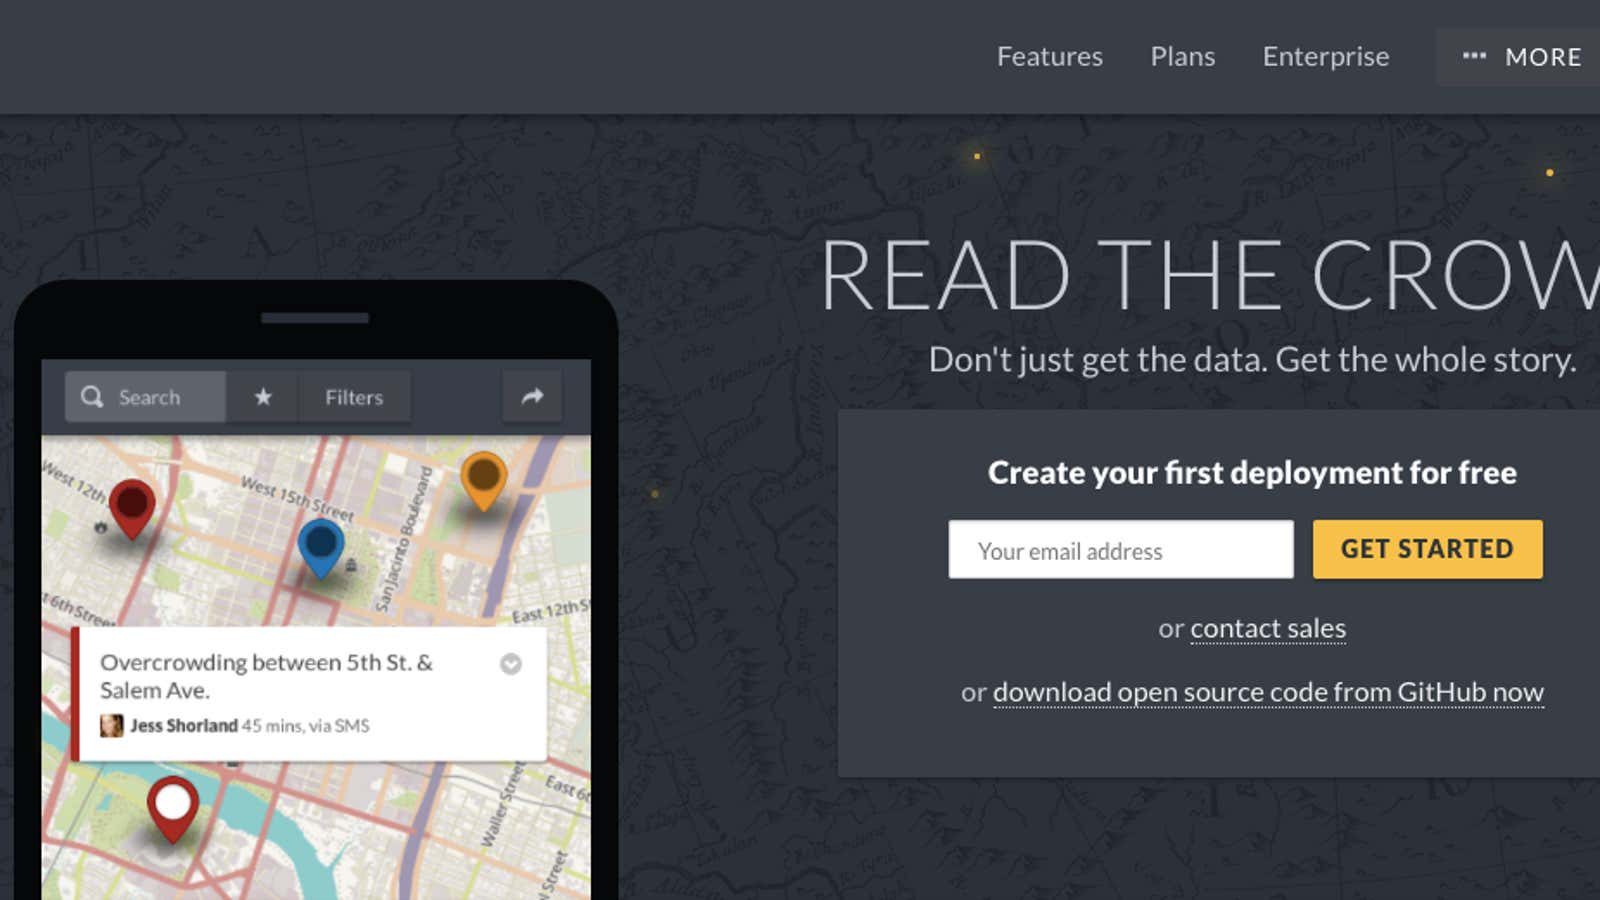 A not-so-good week for Ushahidi